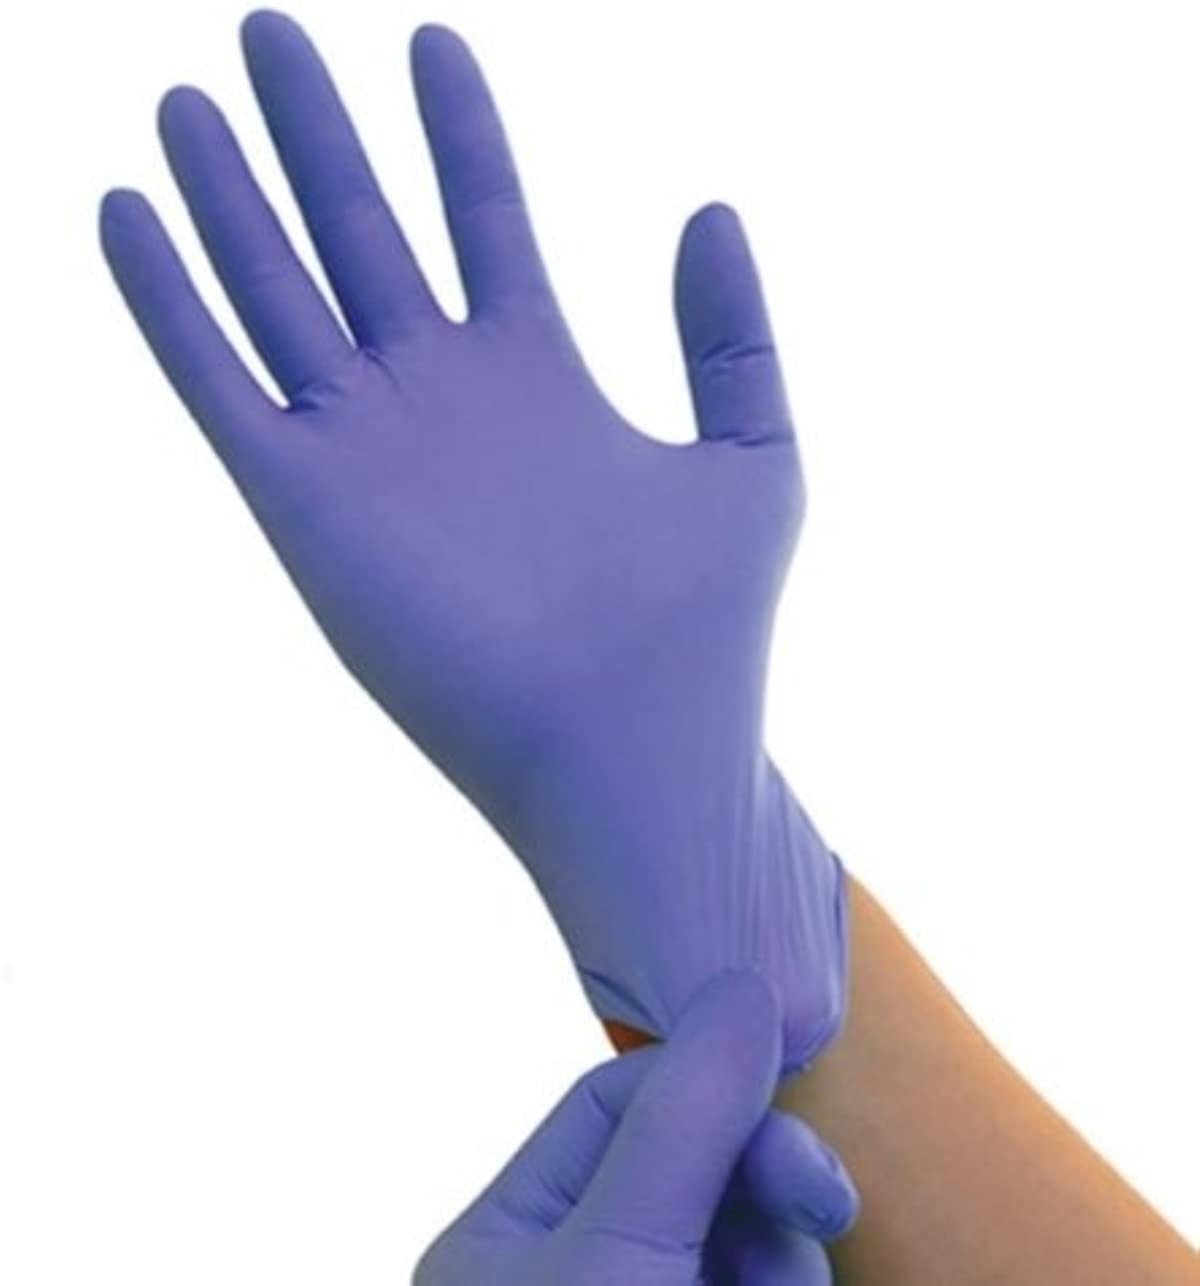 MedPride Powder-Free Nitrile Exam Gloves, Large, Box/100